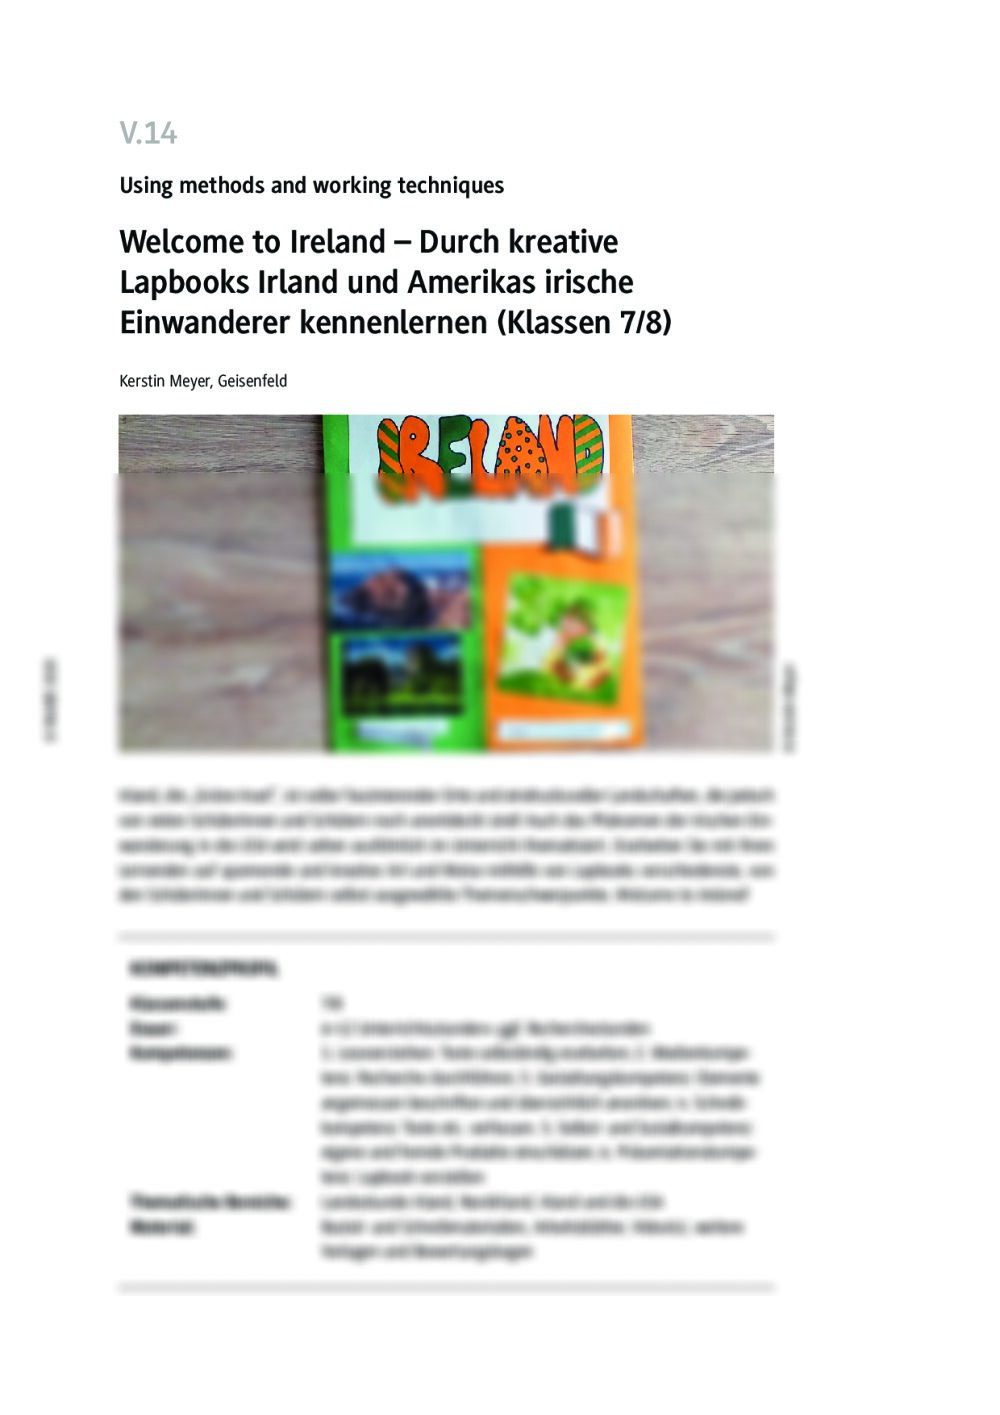 Welcome to Ireland - Seite 1